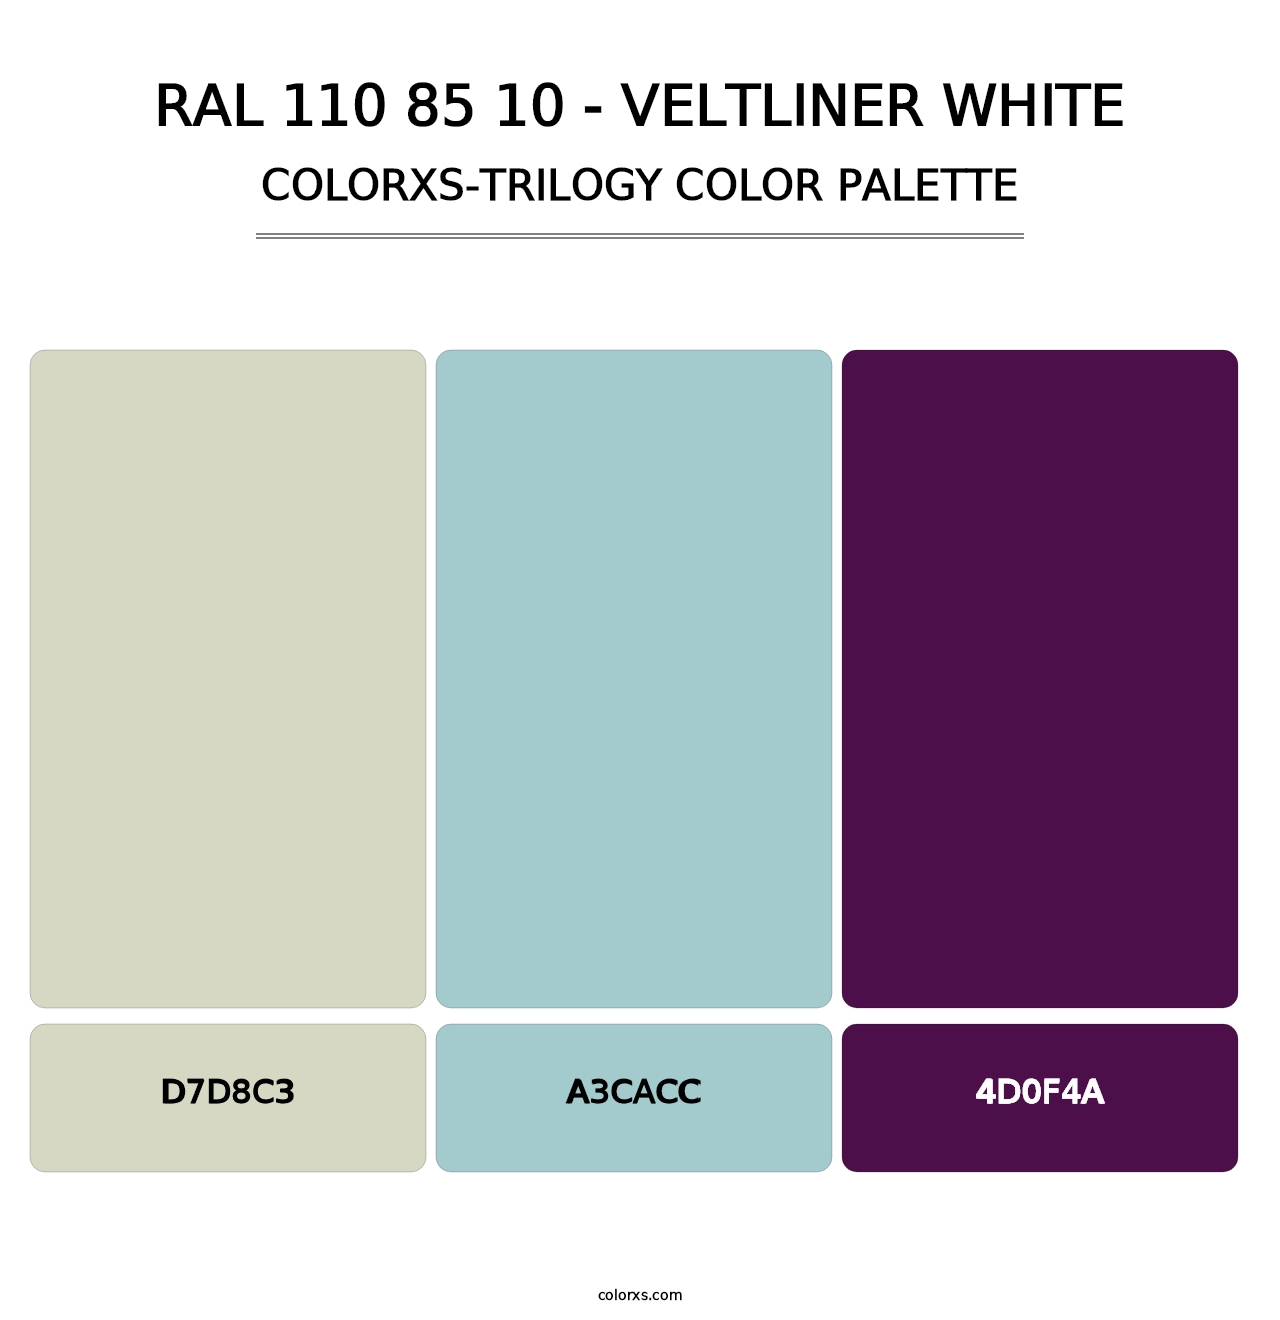 RAL 110 85 10 - Veltliner White - Colorxs Trilogy Palette